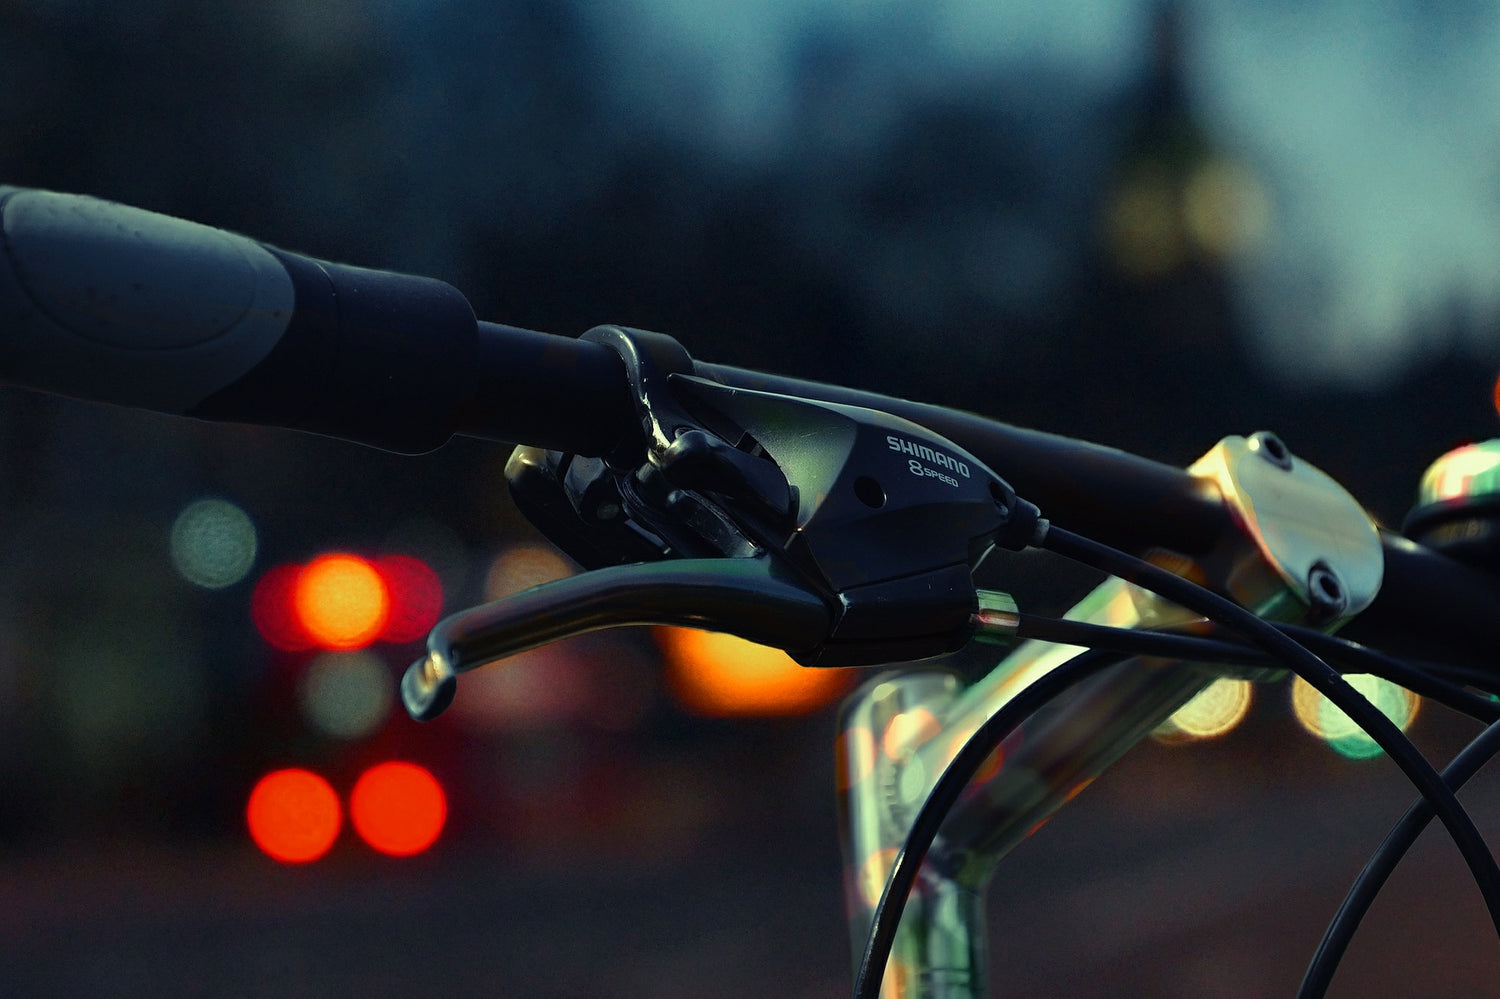 Urban bike accessories to enhance every journey